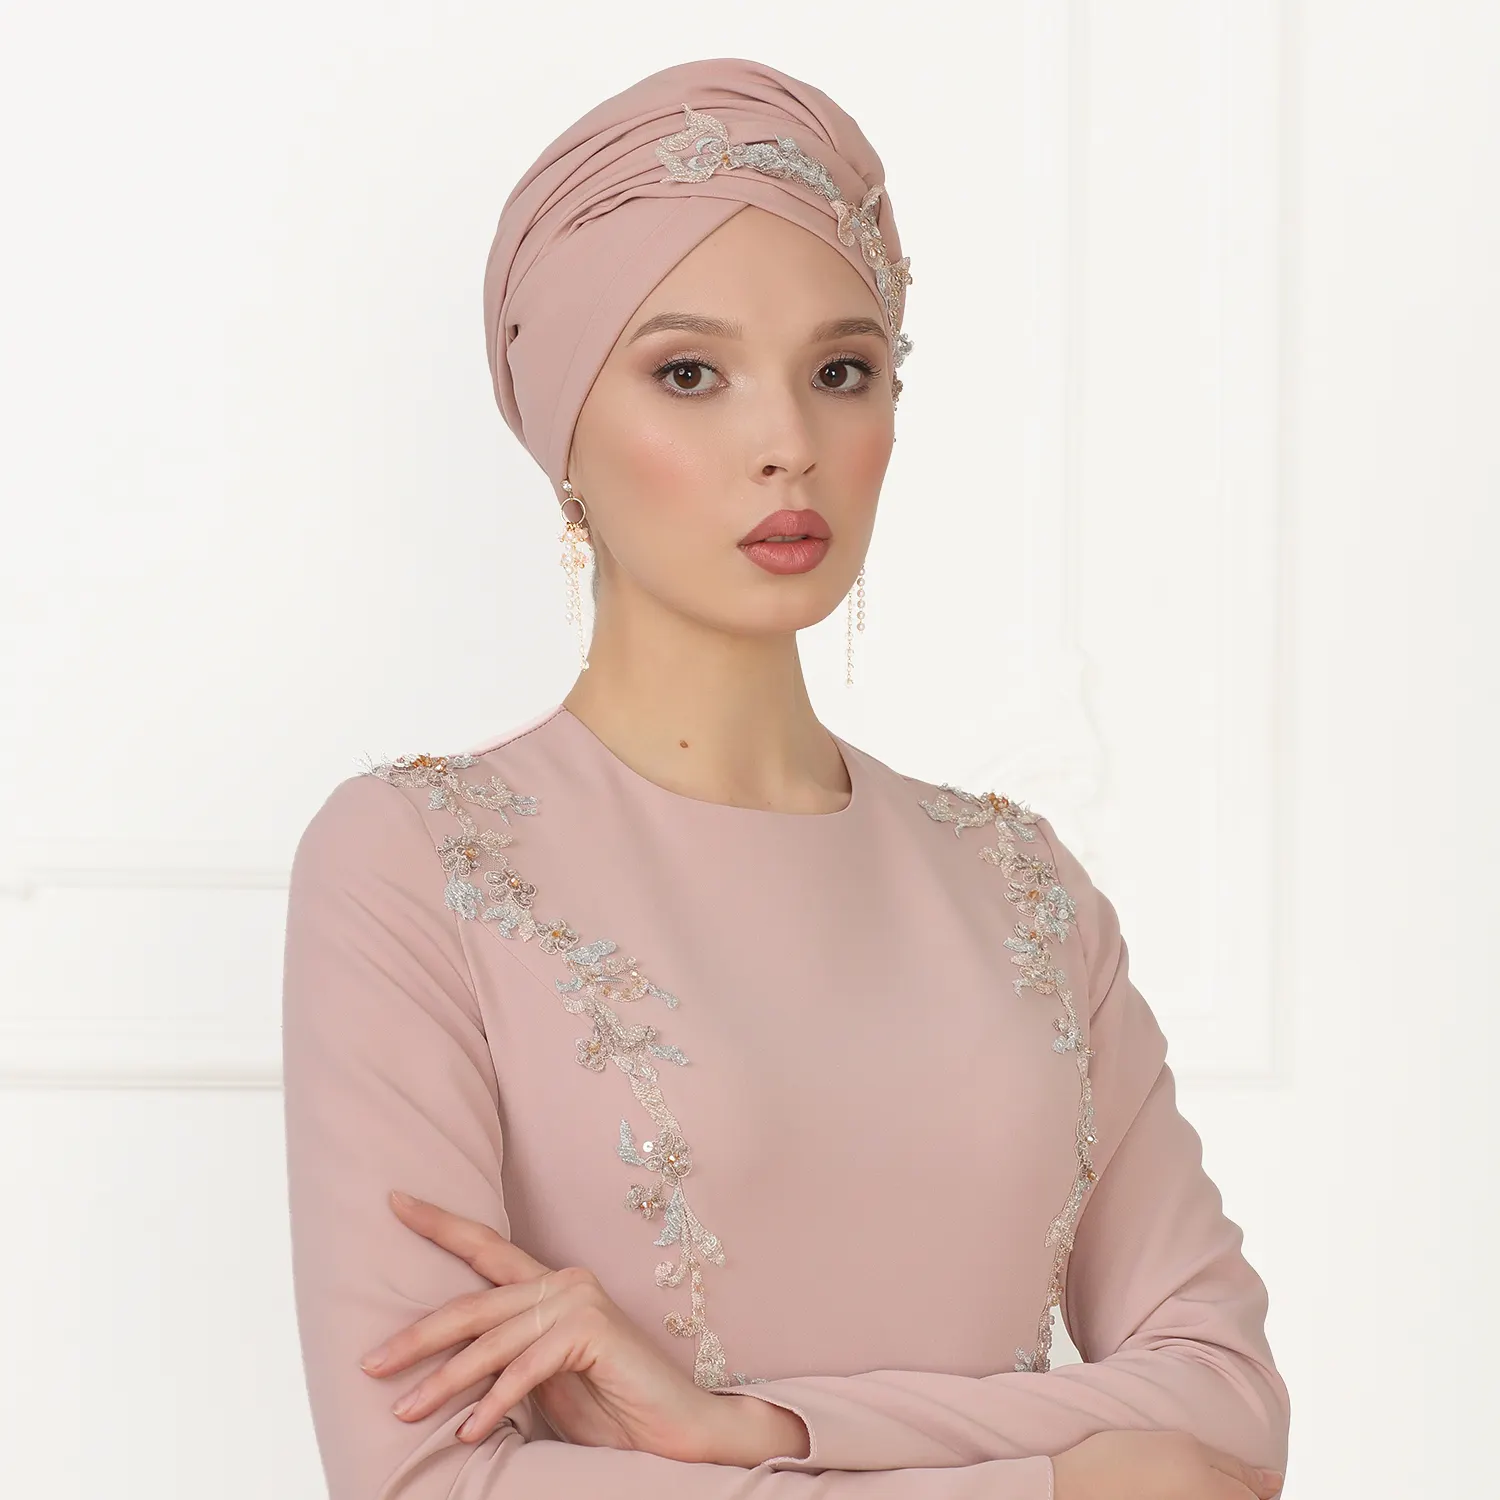 Nikah 국가 이슬람 천 겸손한 웨딩 드레스에 대한 독점 이슬람 긴 핑크 신부 드레스